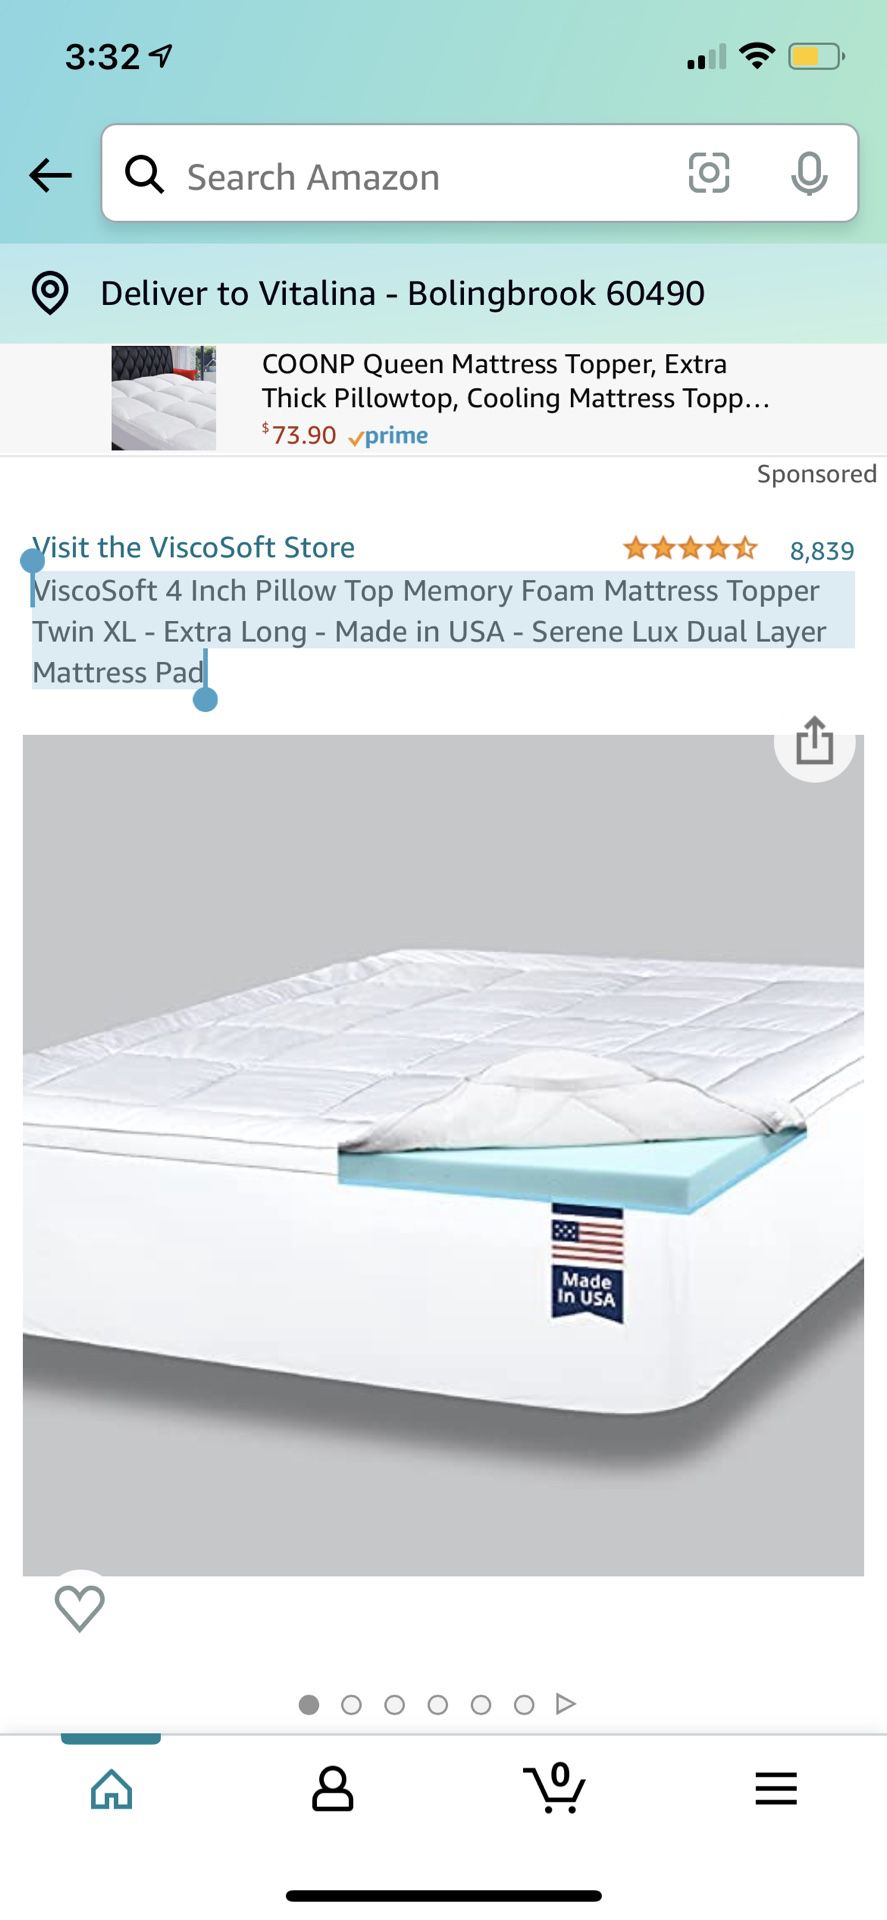 ViscoSoft 4 Inch Pillow Top Memory Foam Mattress Topper Twin XL - Extra Long - Made in USA - Serene Lux Dual Layer Mattress Pad